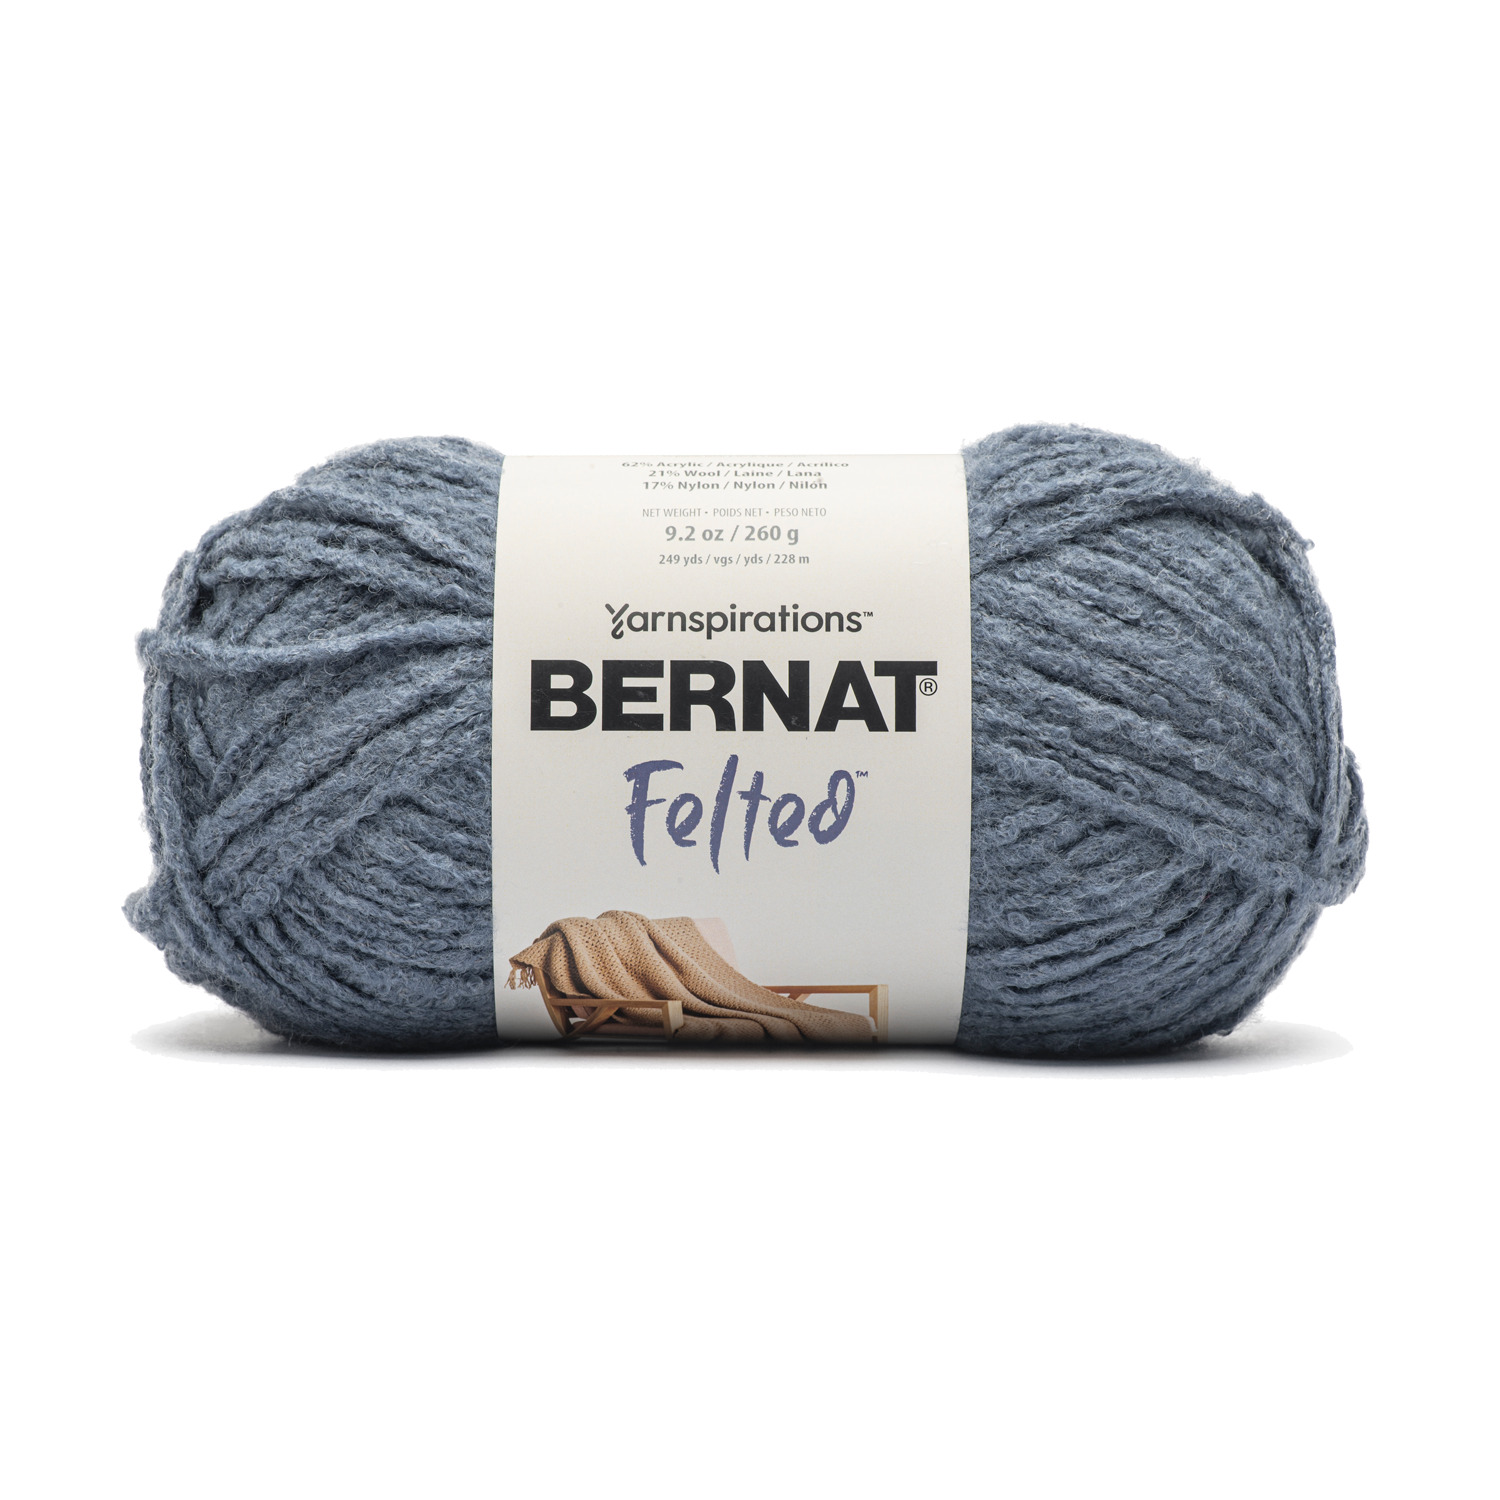 Bernat Felted - Yarn, Storm blue